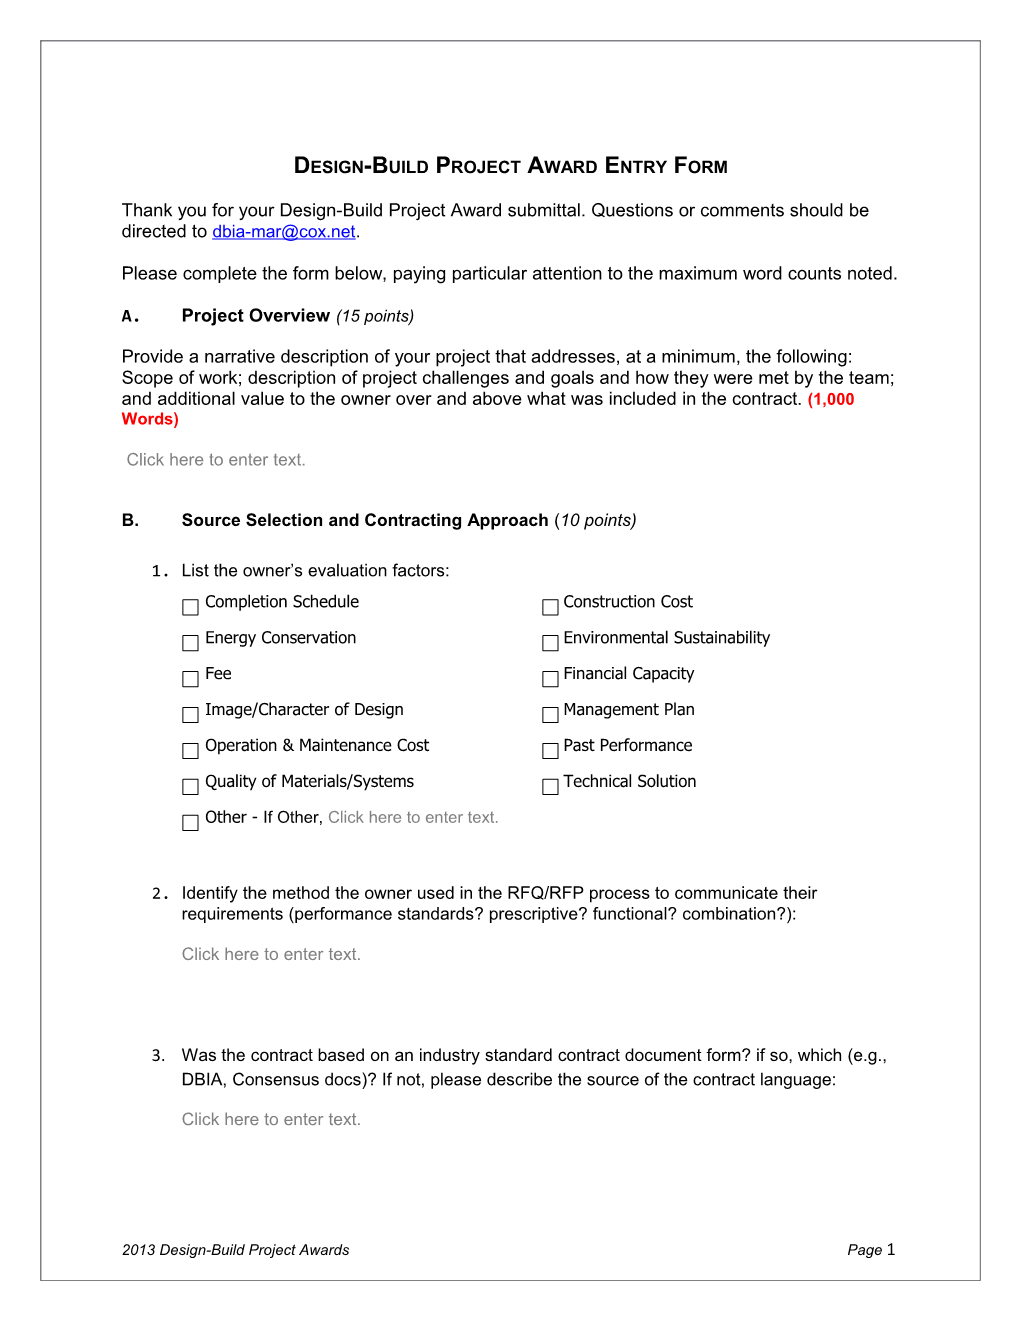 Design-Build Project Award Entry Form